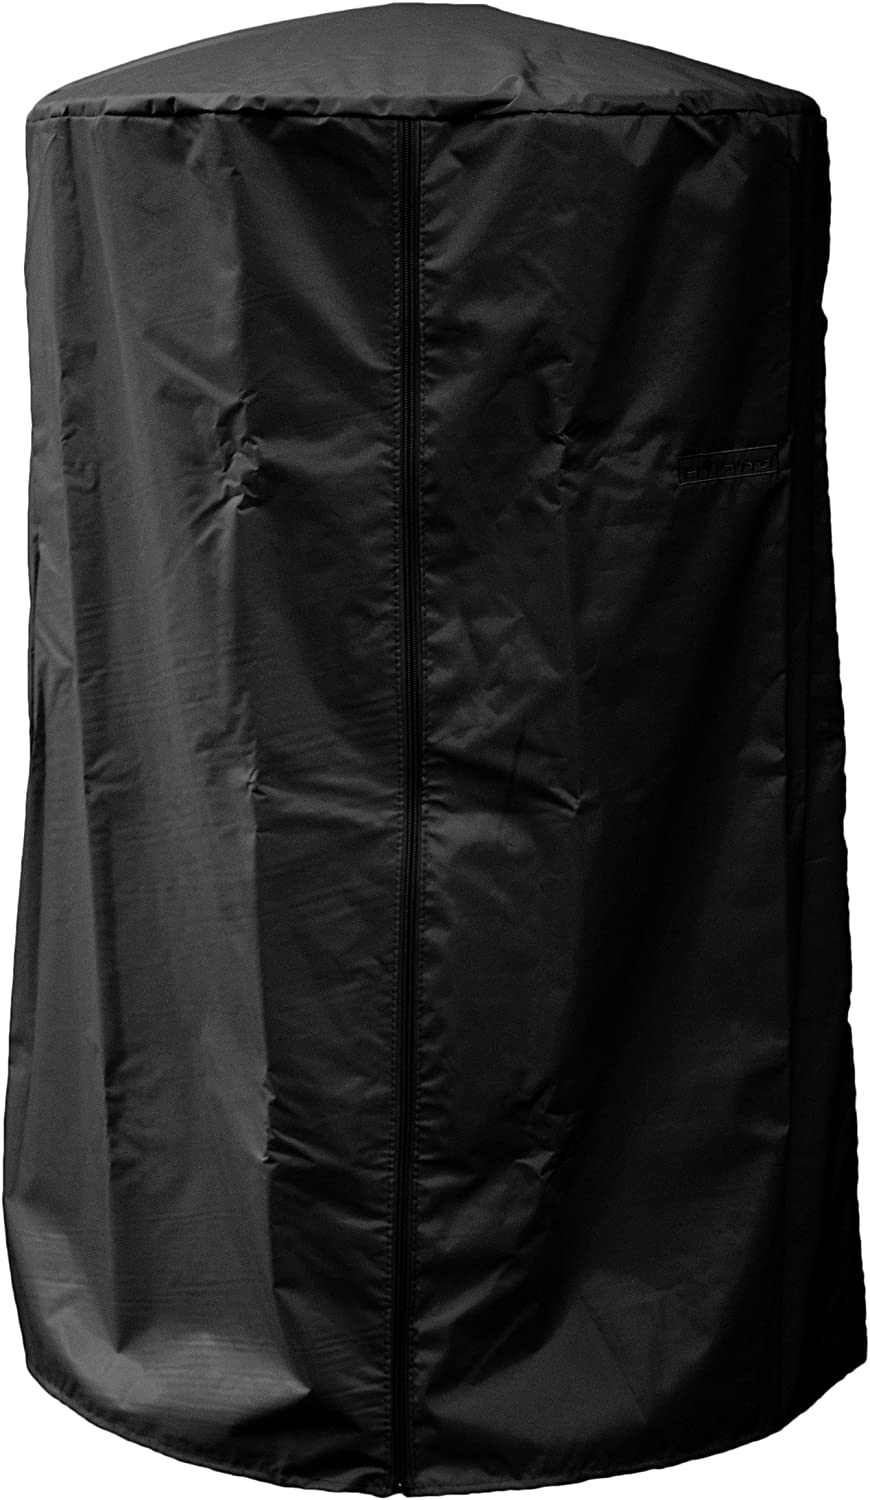 Kohnkdllc Patio Heater Covers Outdoor Waterproof Anti-UV Windproof with Zipper for Outdoor Heater Heavy Duty 210D Oxford Fabric Black 